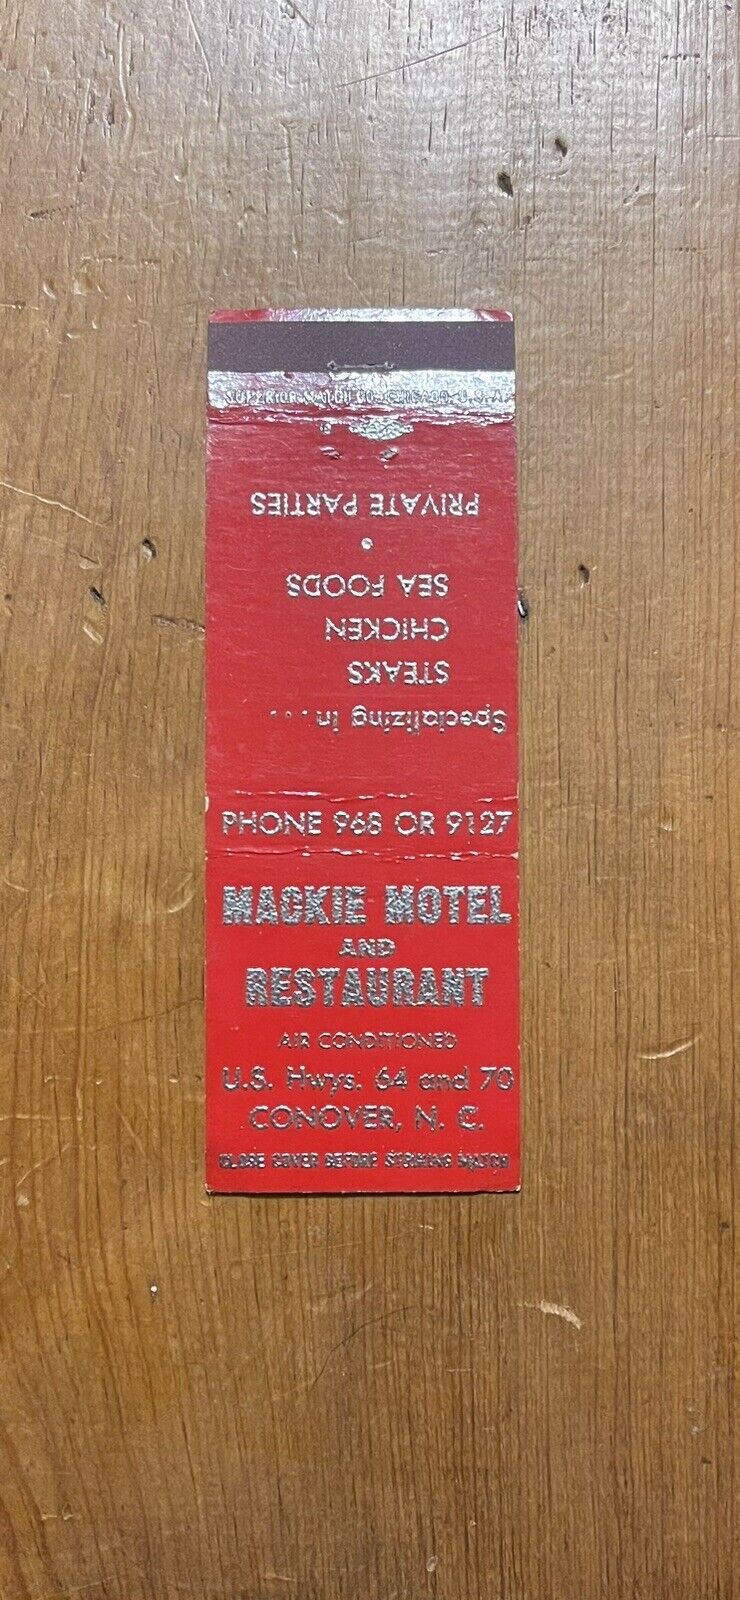 Mackie Motel And Restaurant Conover North Carolina Vintage Matchbook Cover